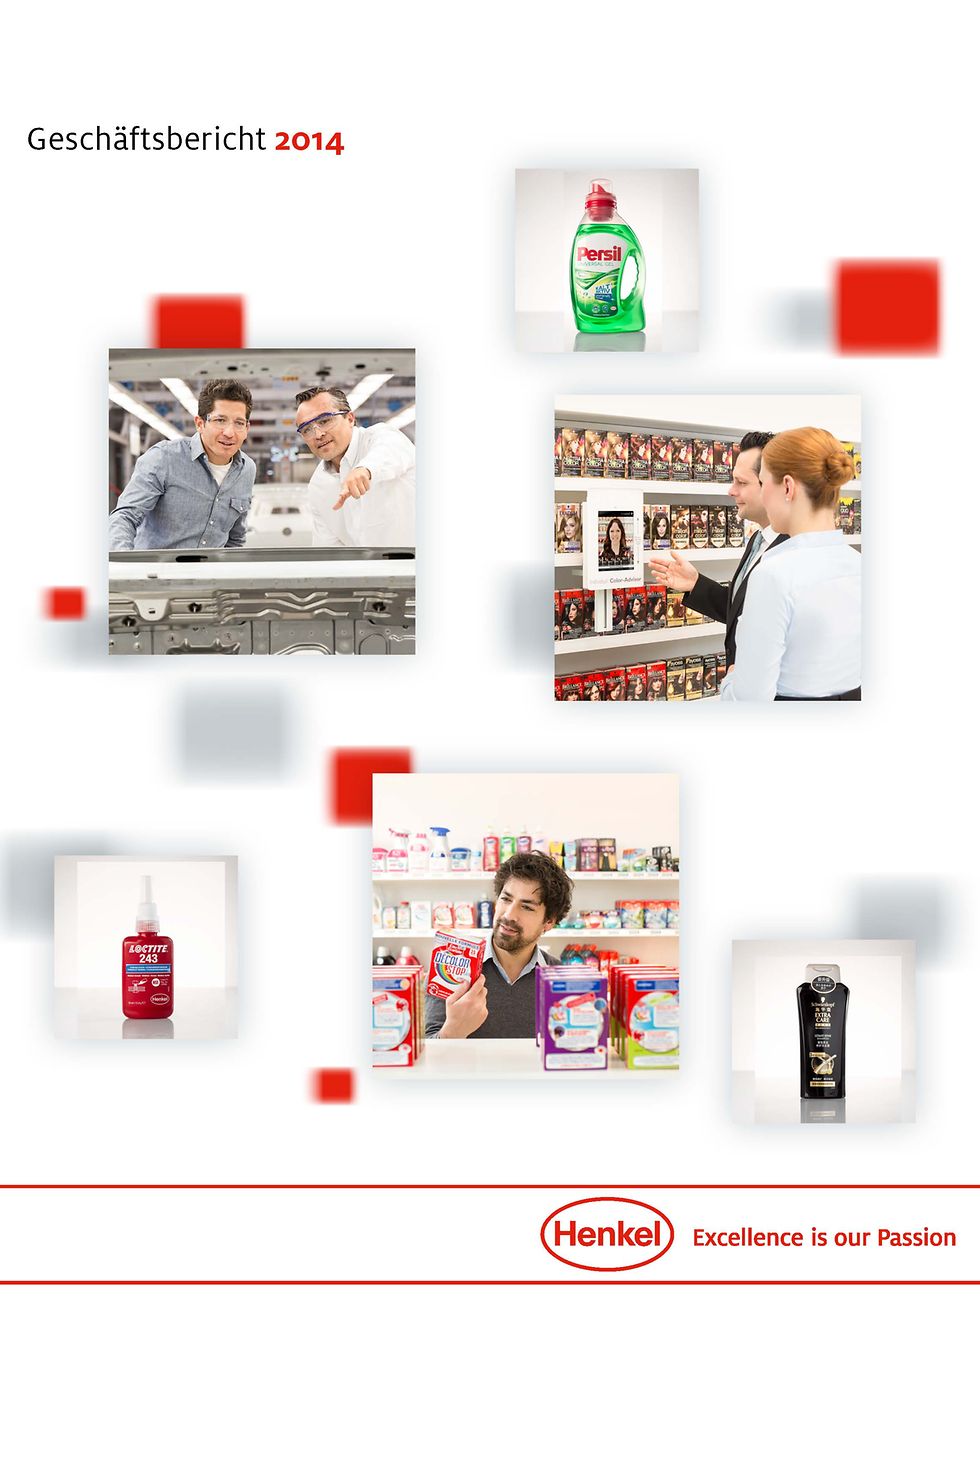 Henkel-Geschäftsbericht 2014 